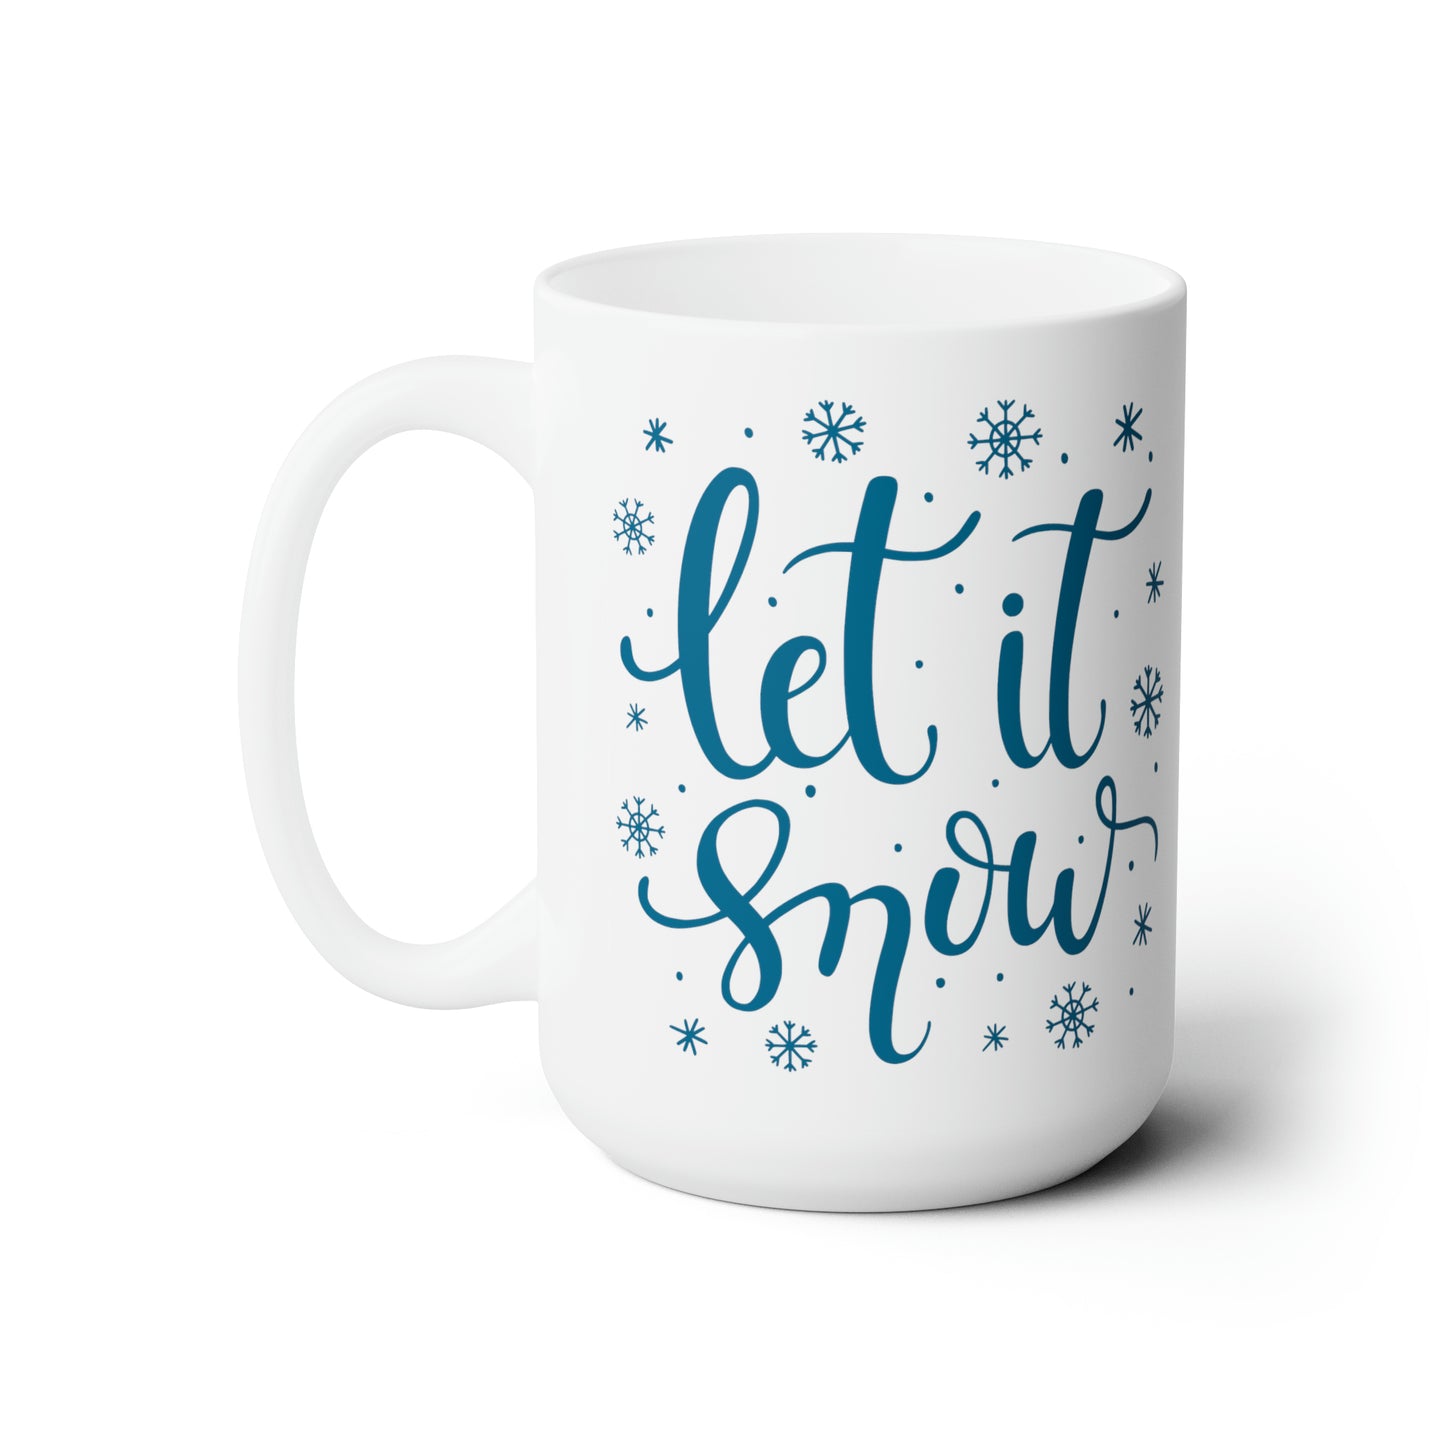 Let It Snow Coffee Mug Hot Beverage Cup Winter Tea Cup